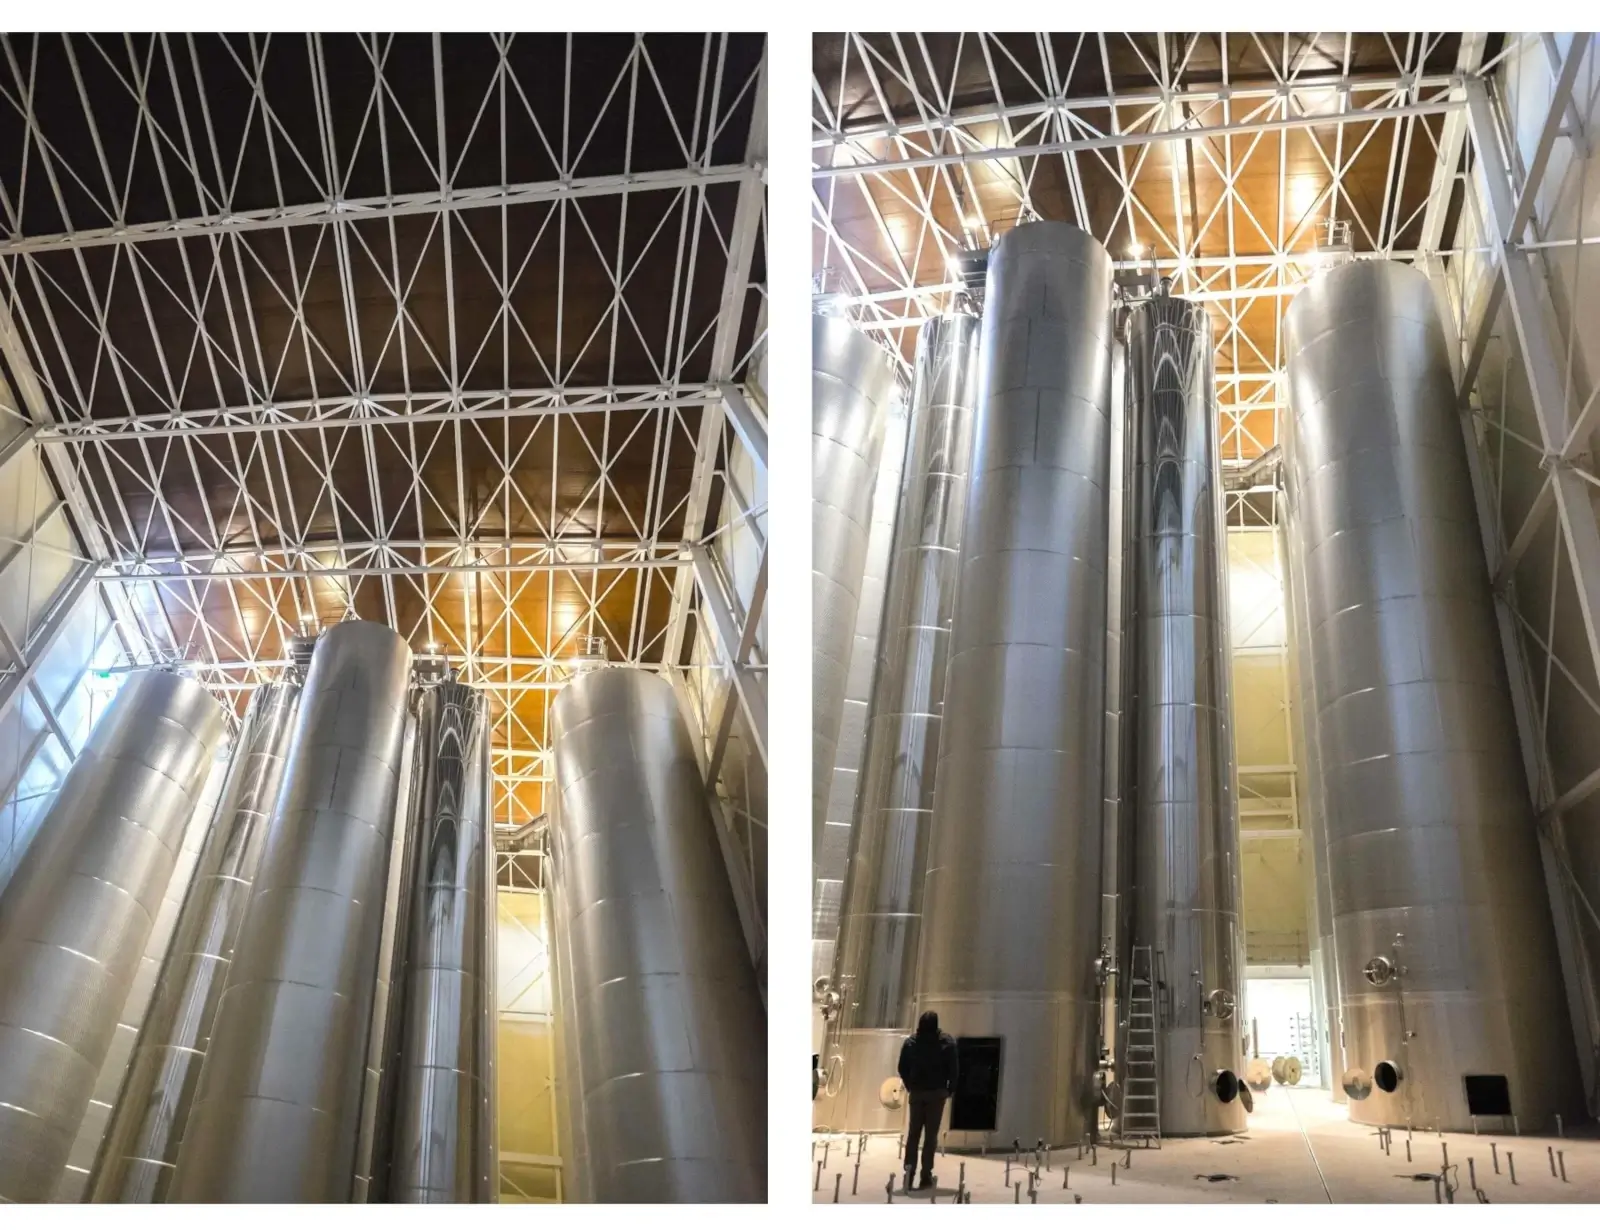 Progettazione torri silos 6205_3 | Mangili & Associati Spa